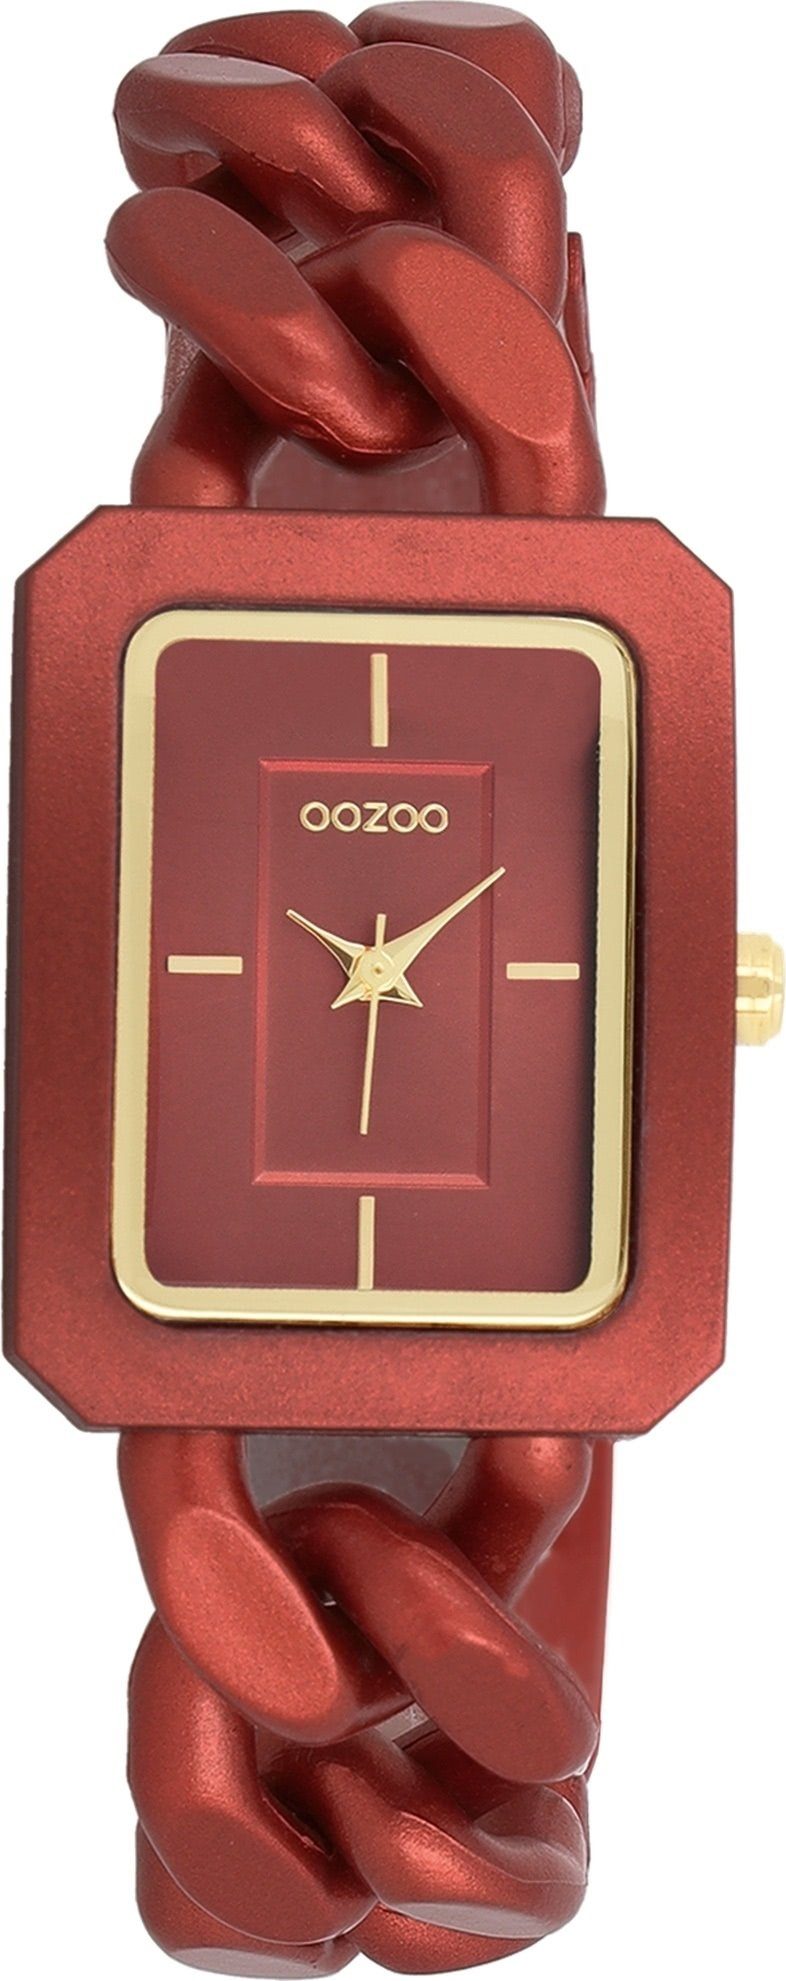 (ca. 31x24mm) Oozoo Armbanduhr groß Fashion rechteckig, Analog, Kunststoffarmband, OOZOO Damenuhr Quarzuhr Timepieces Damen